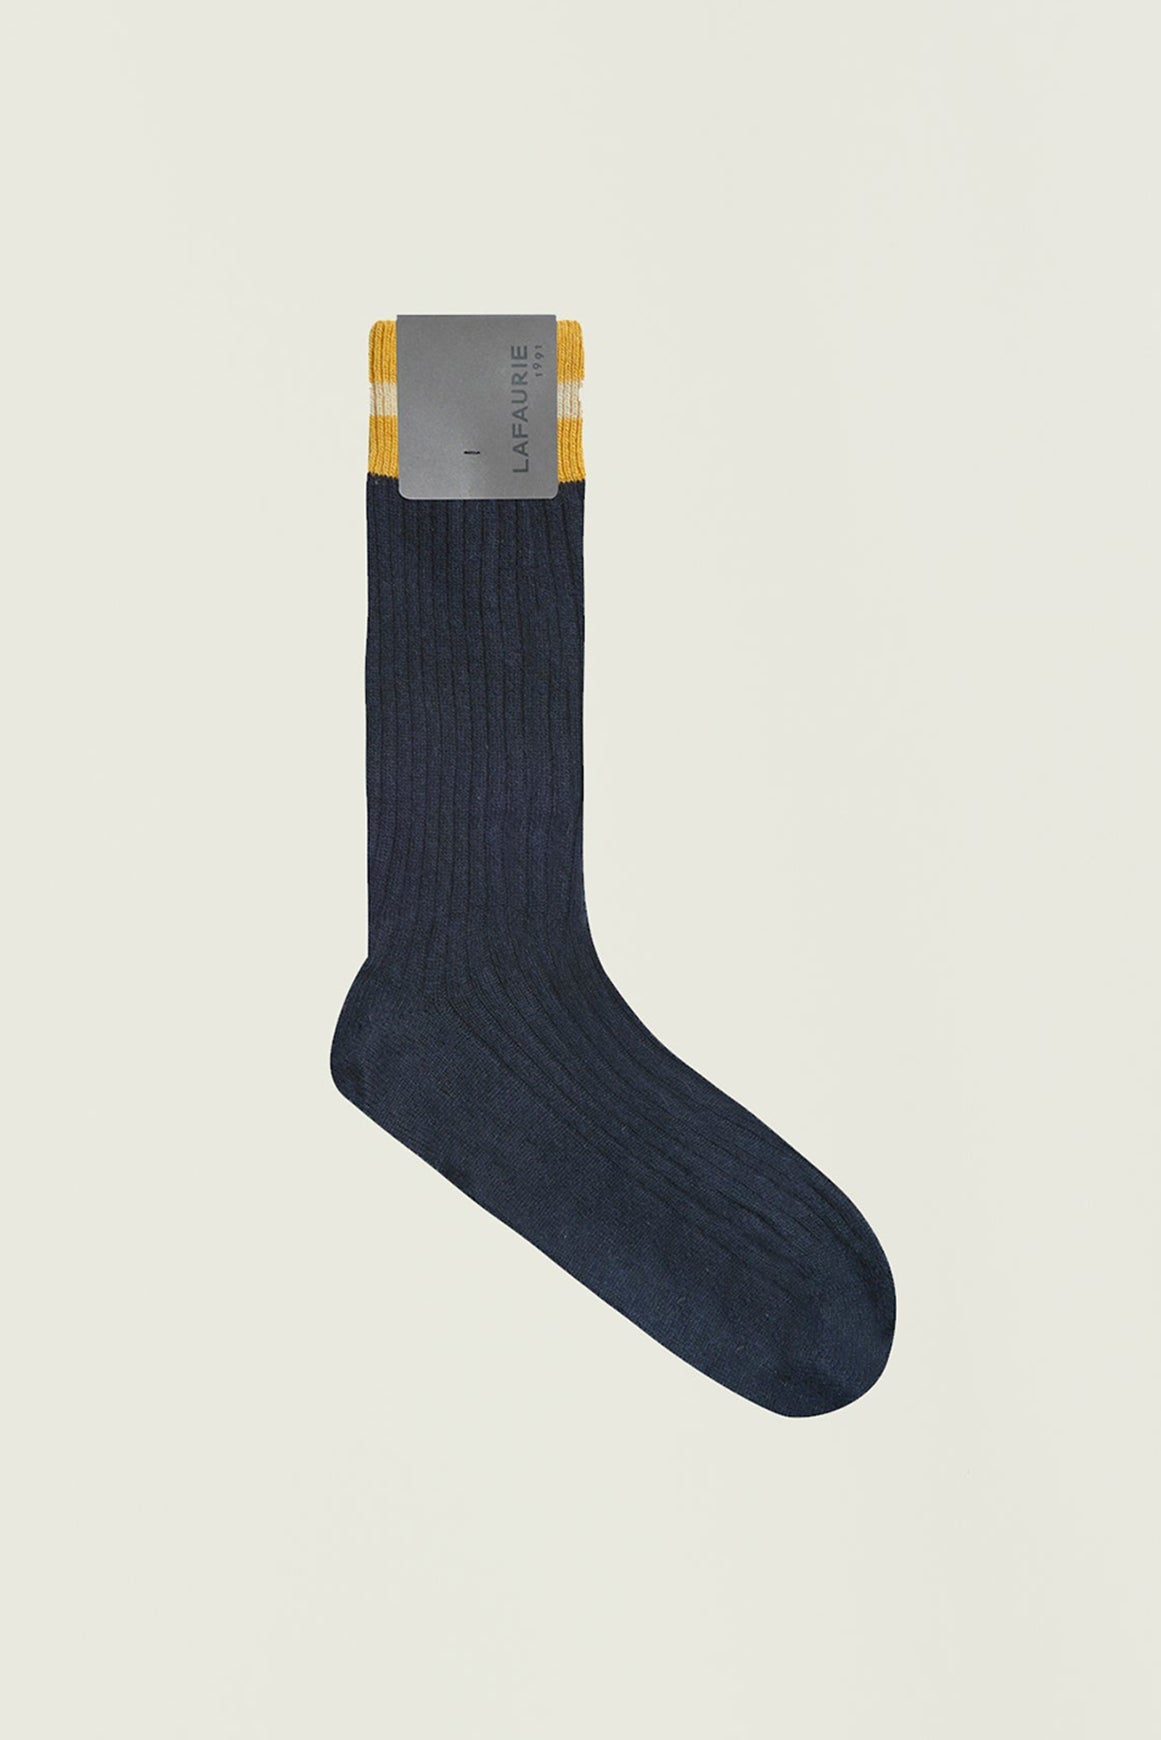 COLLEGE Socks - Navy/Mustard